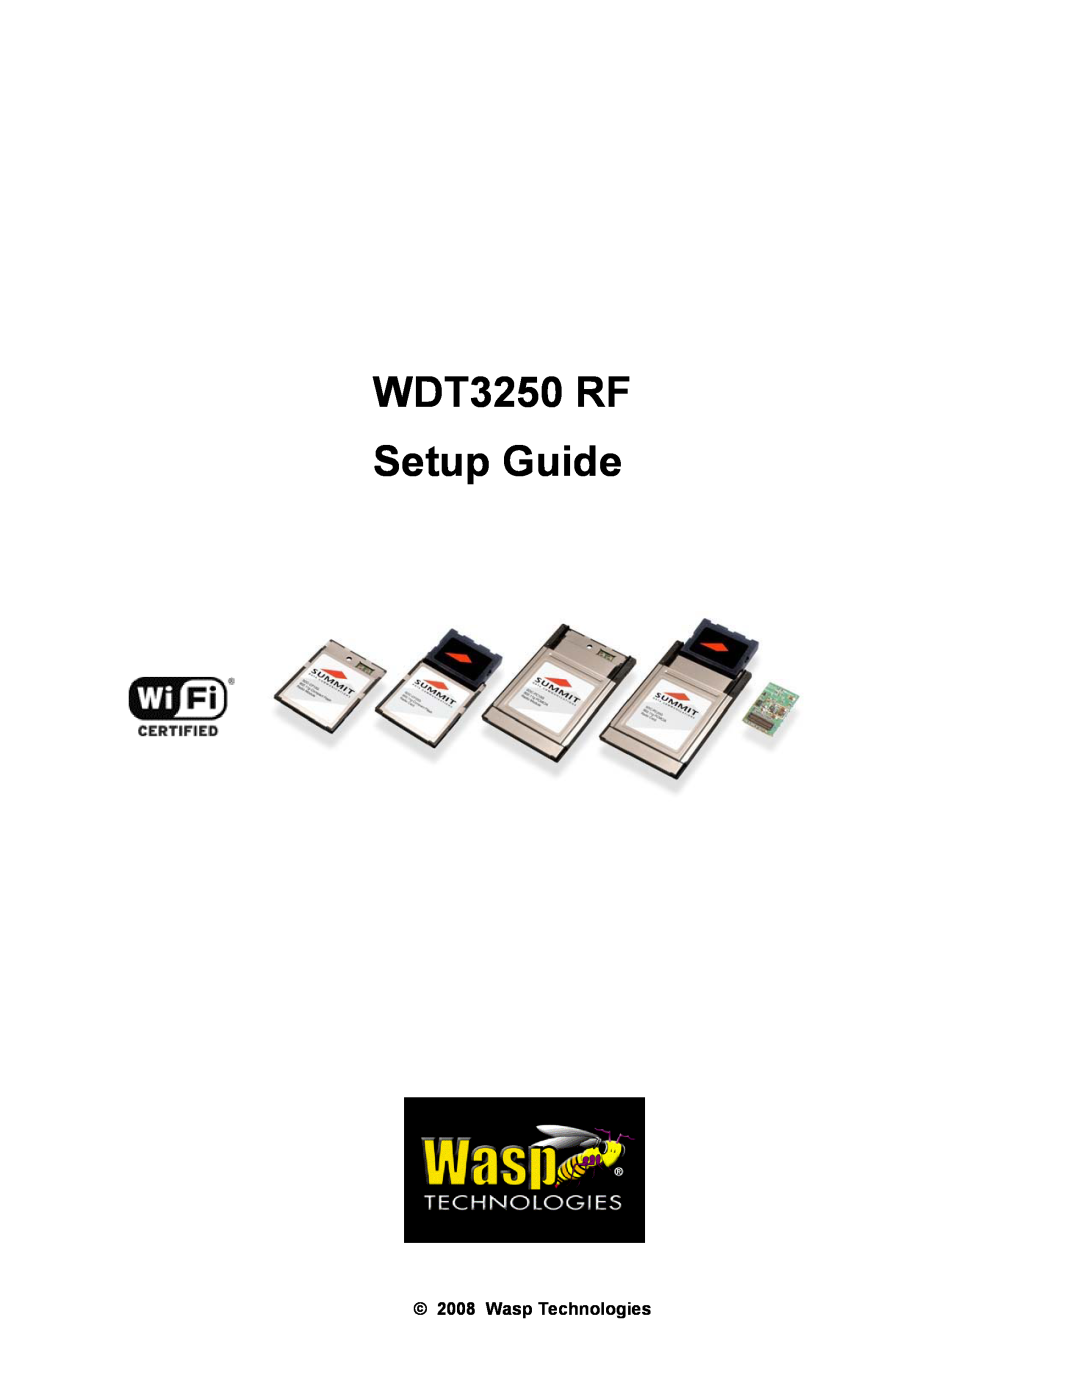 Wasp Bar Code setup guide WDT3250 RF Setup Guide, Wasp Technologies 